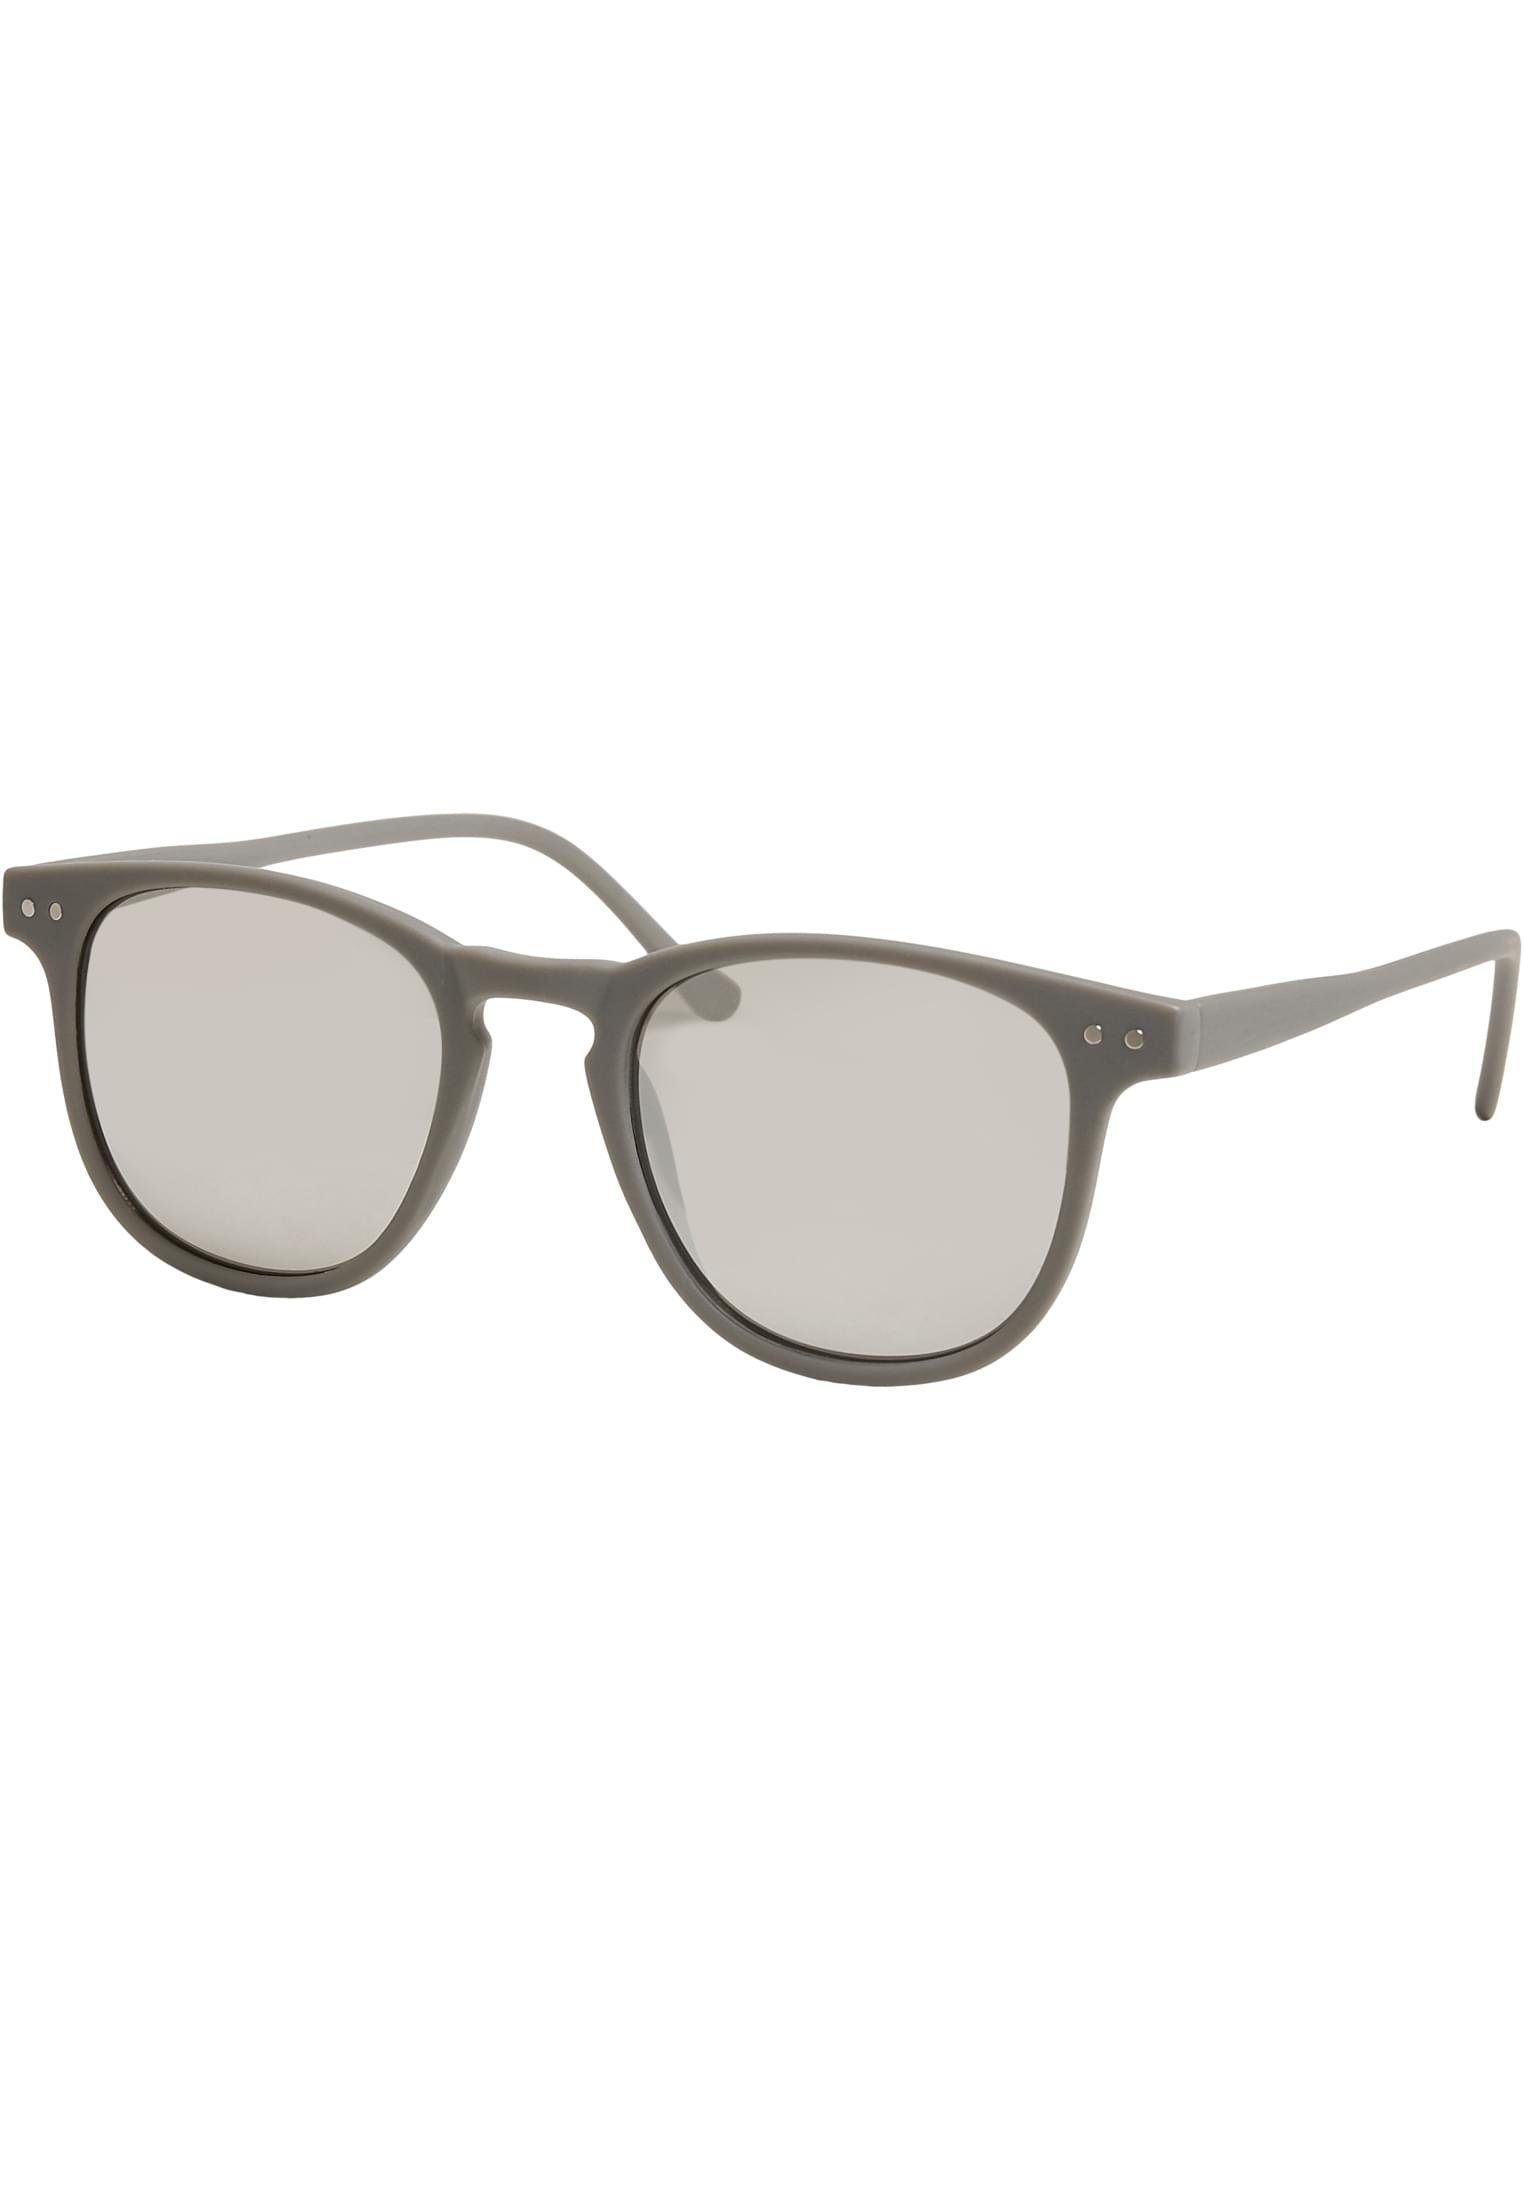 URBAN CLASSICS Sonnenbrille Unisex Arthur Chain with grey/silver Sunglasses